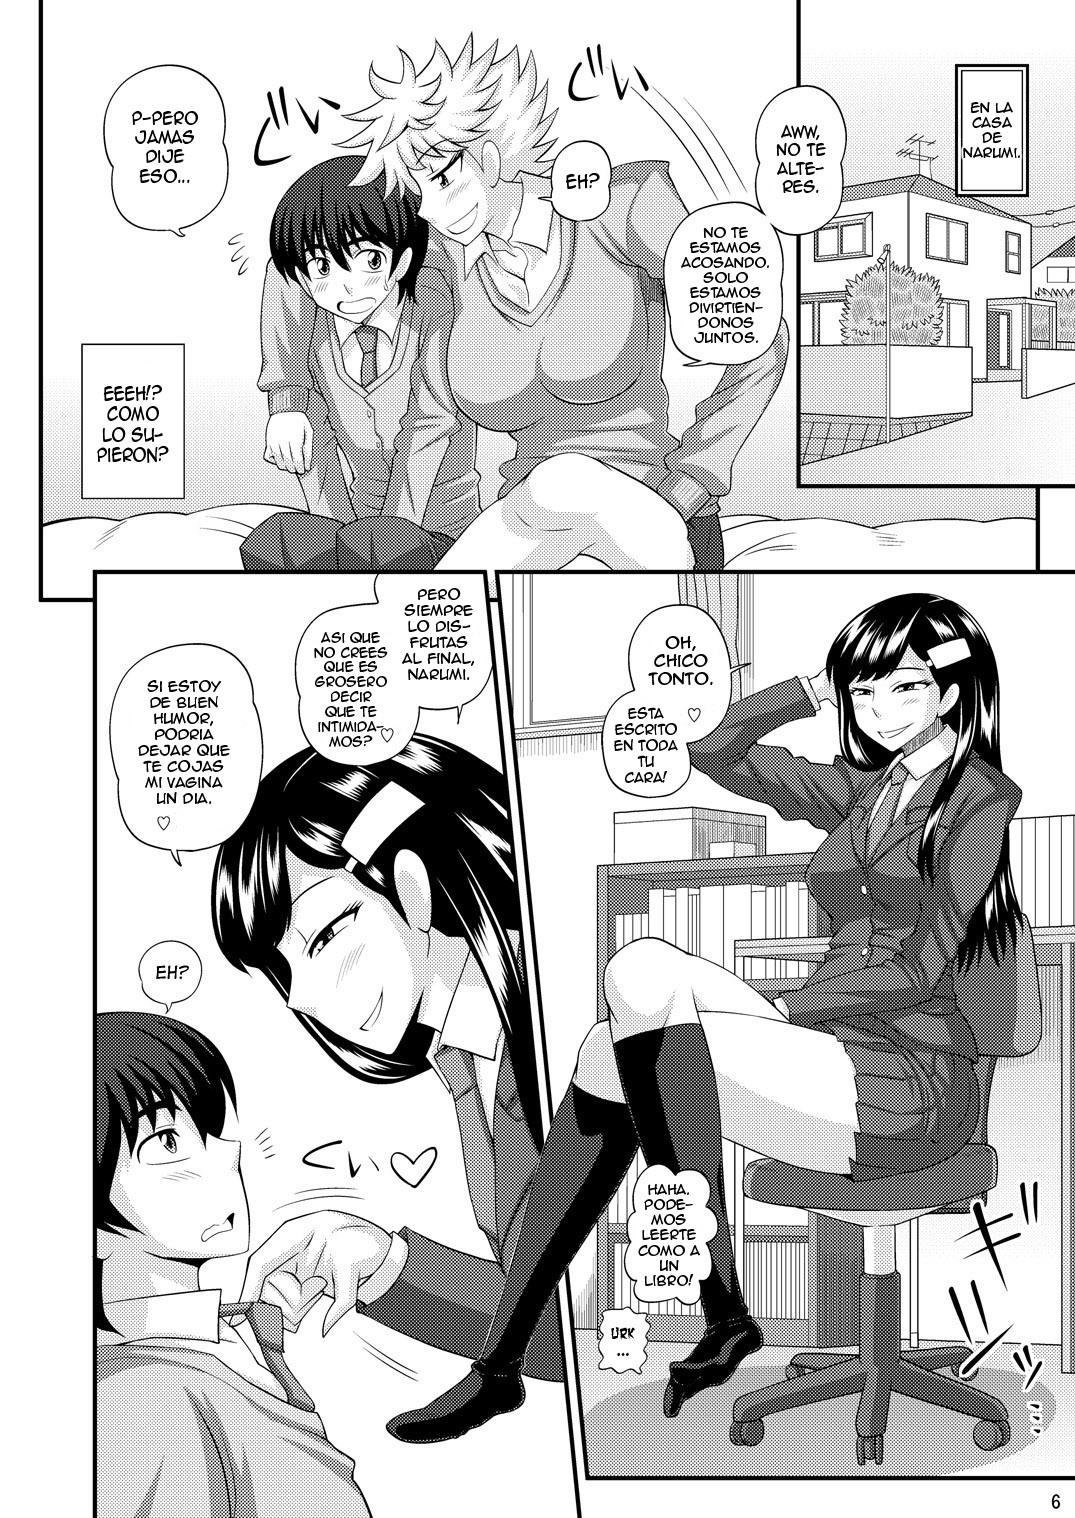 Crossdressing Yaoi Hentai Manga Mega Porn Pics